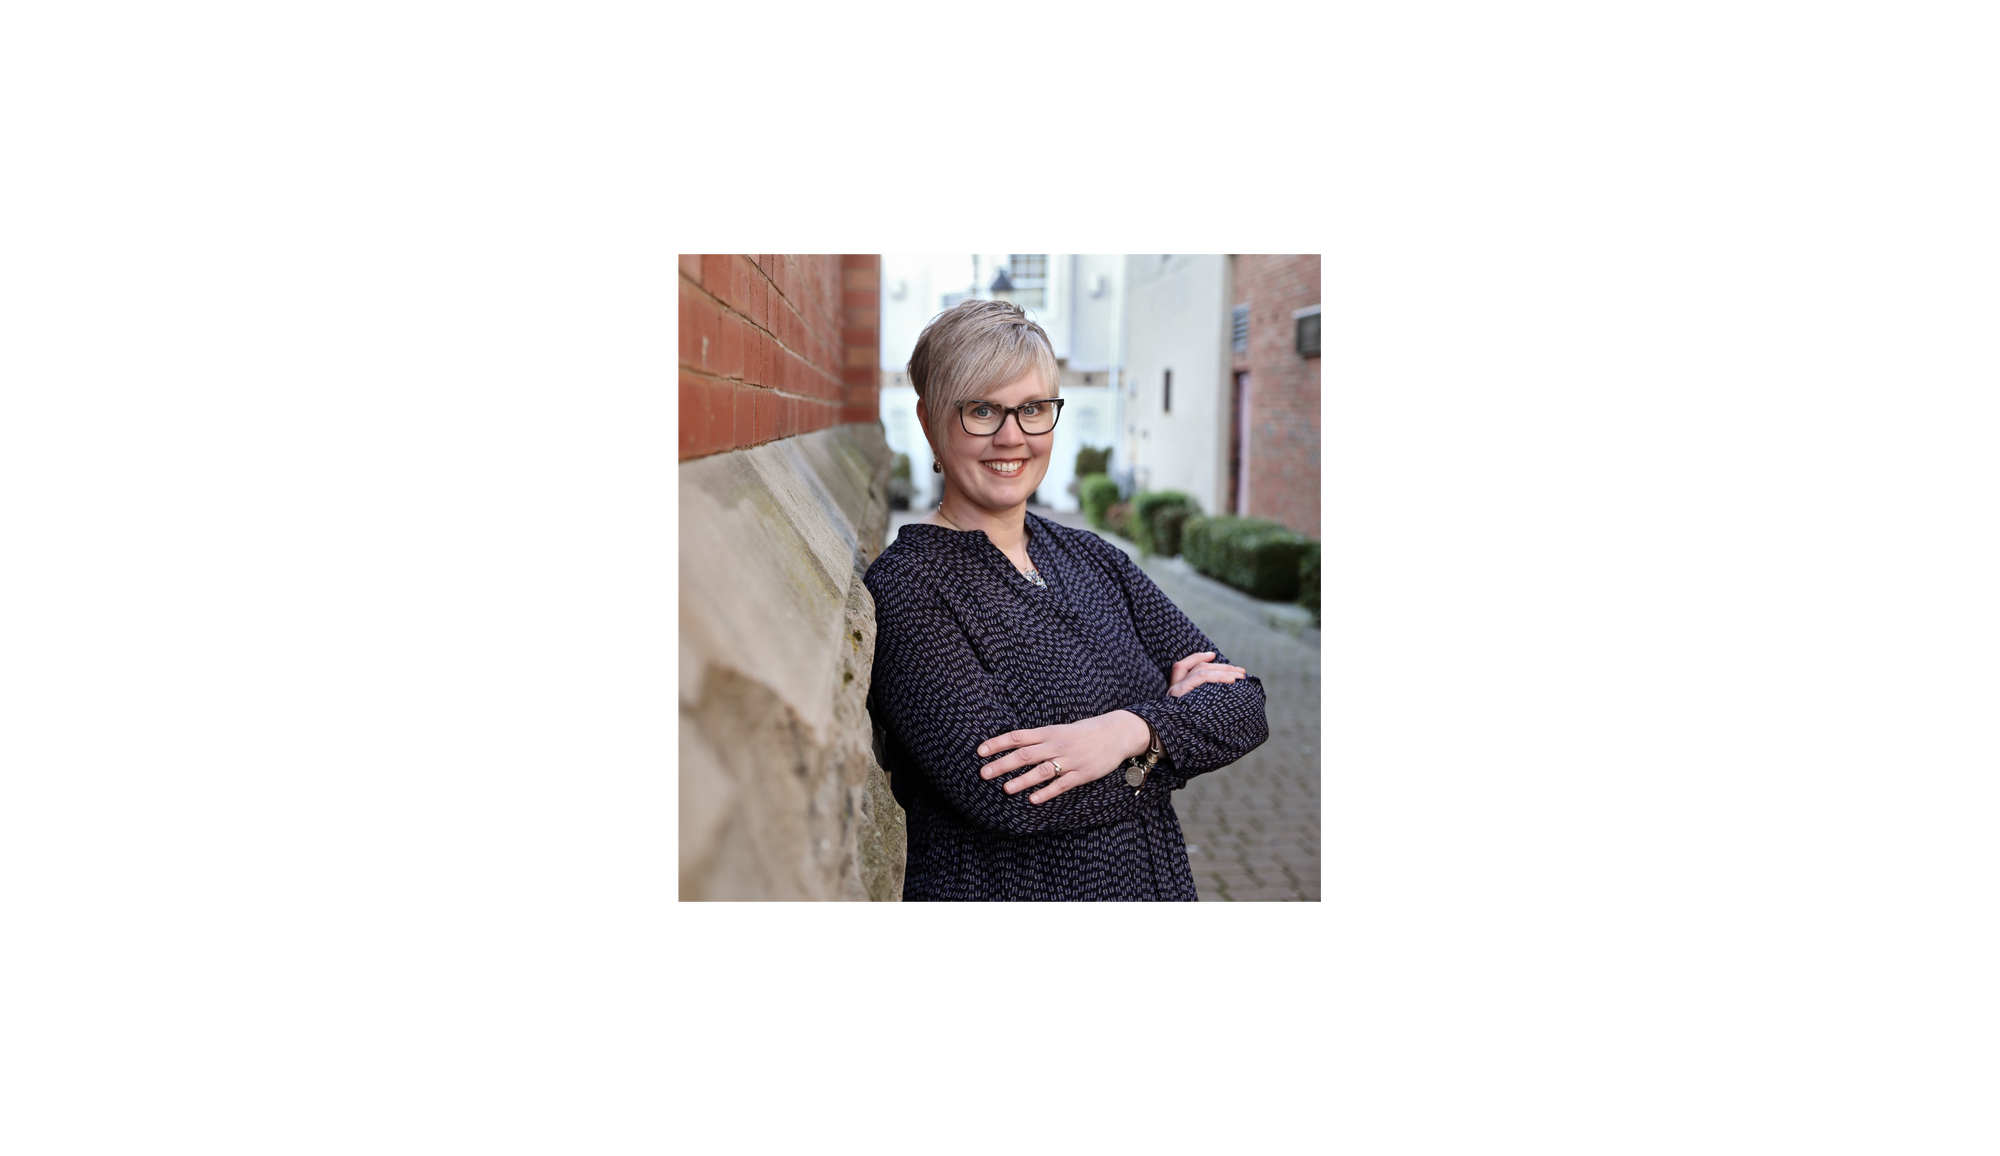 Changemaker and Communications Expert - Cynthia Lockrey